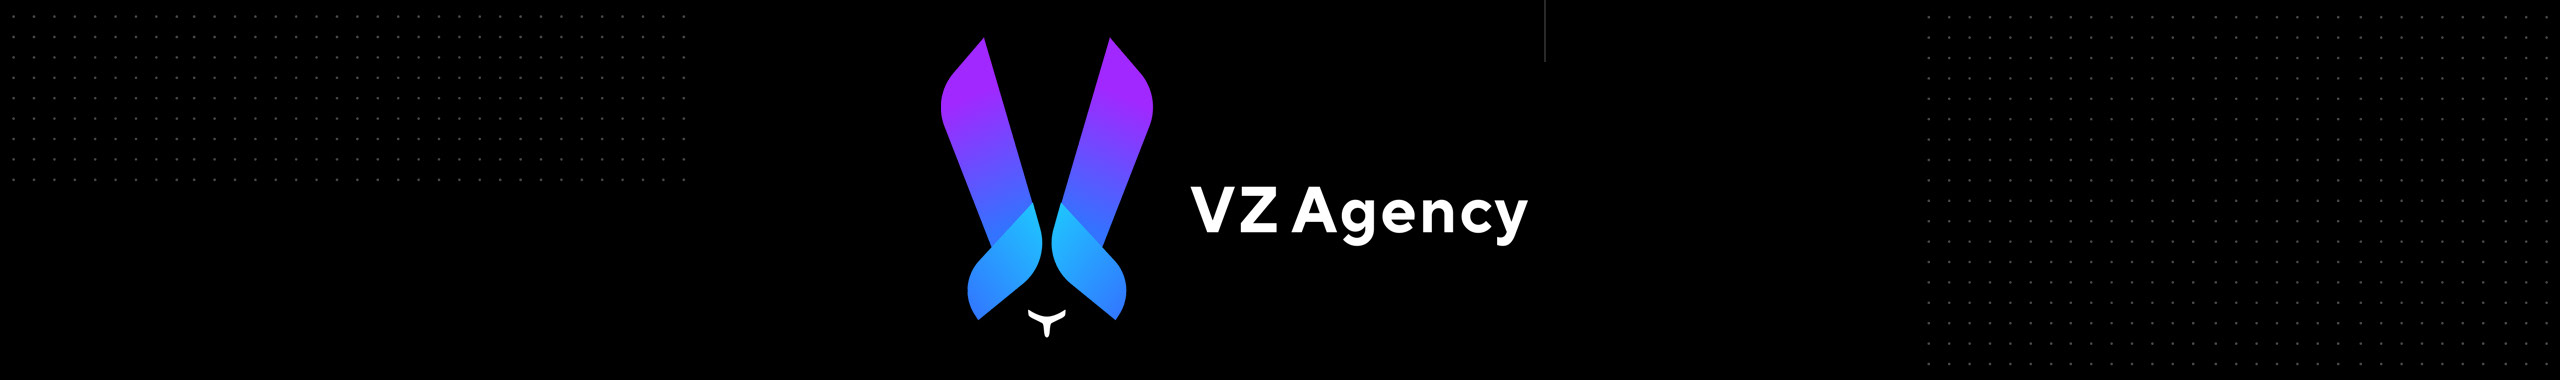 VZ Agency's profile banner